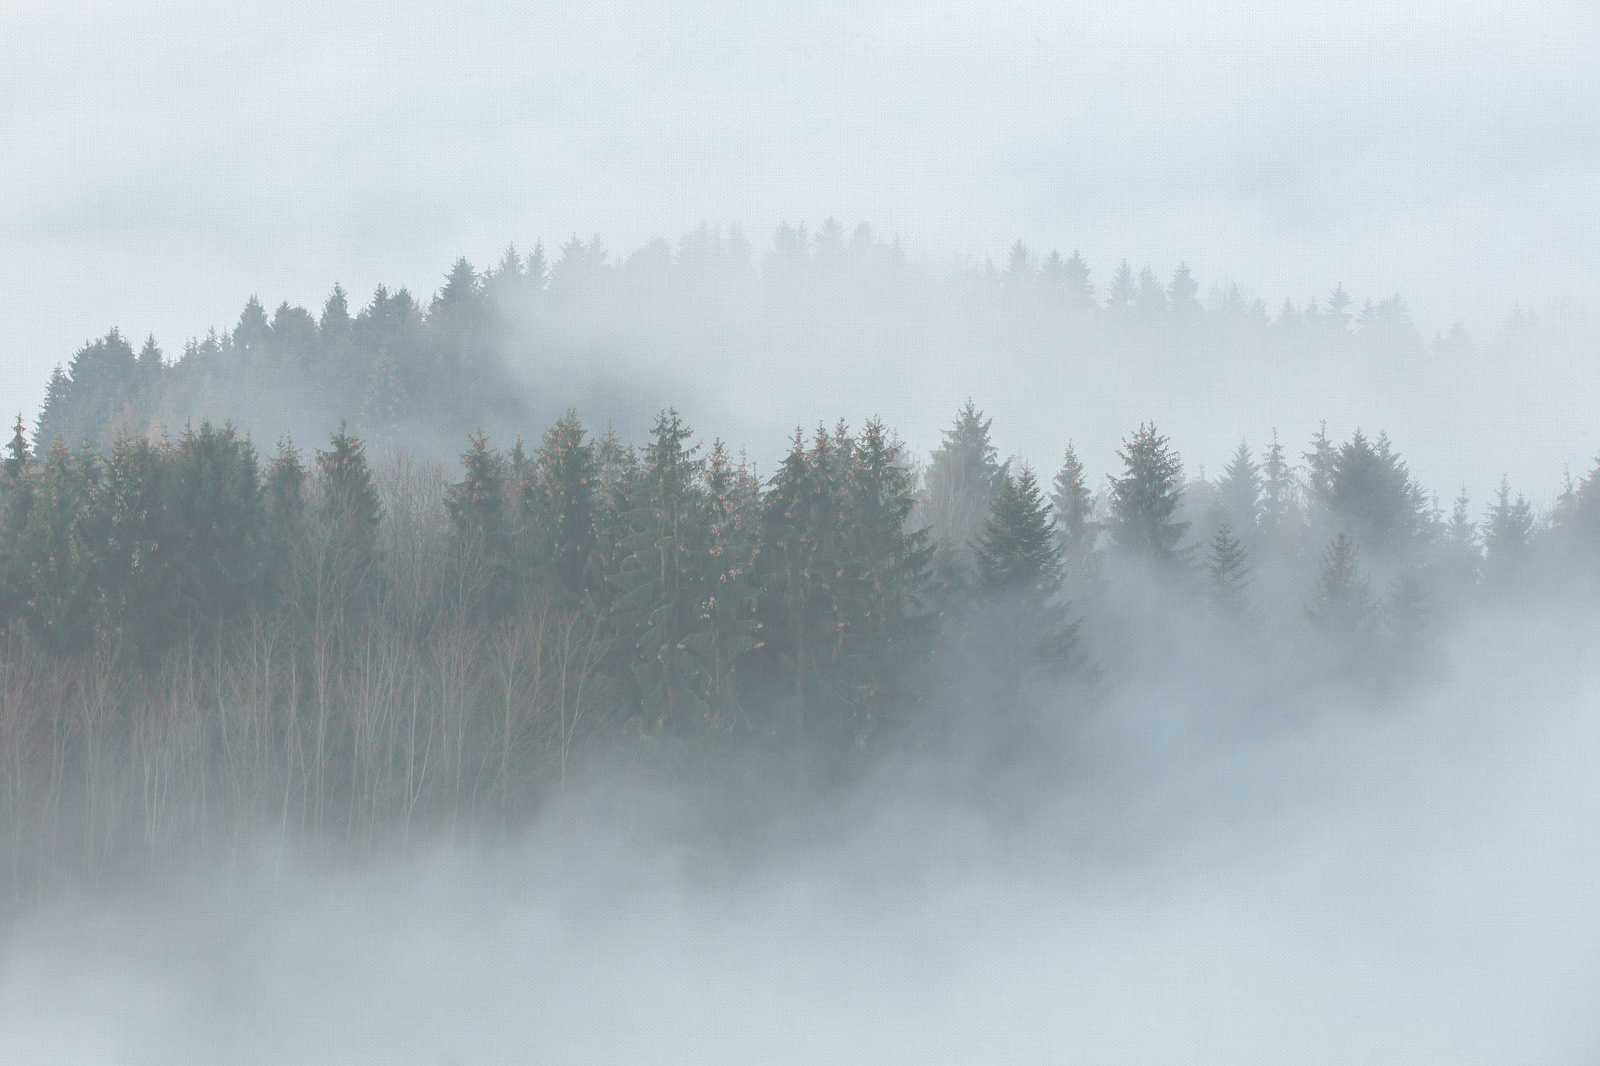             Canvas met mysterieus bos in de mist - 0.90 m x 0.60 m
        